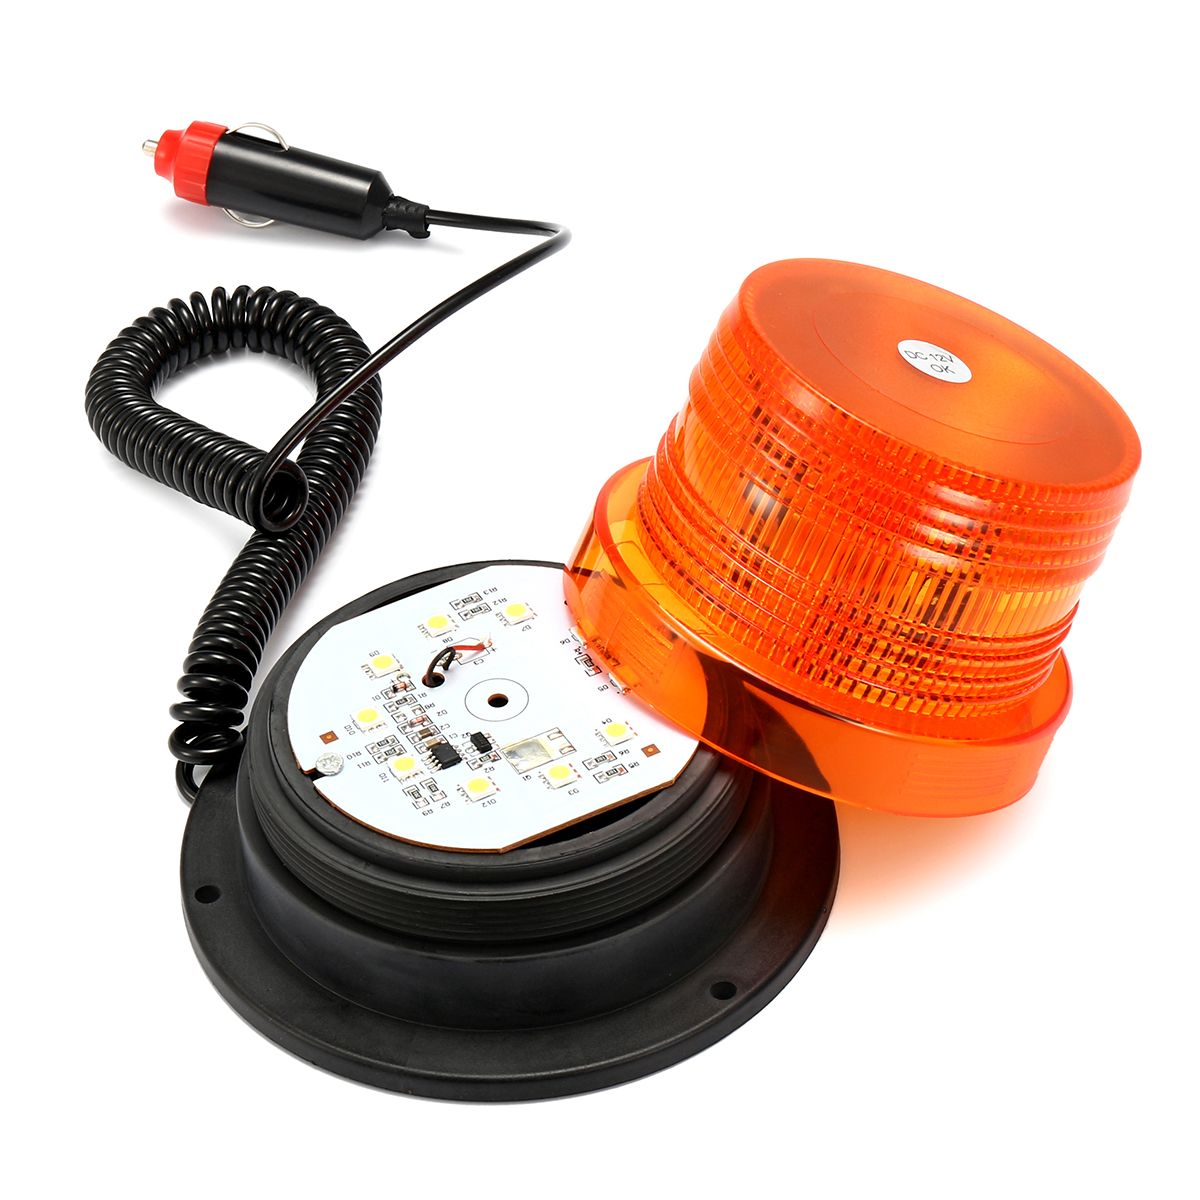 24W-Amber-LED-Rotary-Emergency-Light-Flash-Stobe-Beacon-Warning-Lamp-for-Car-Truck-1309816